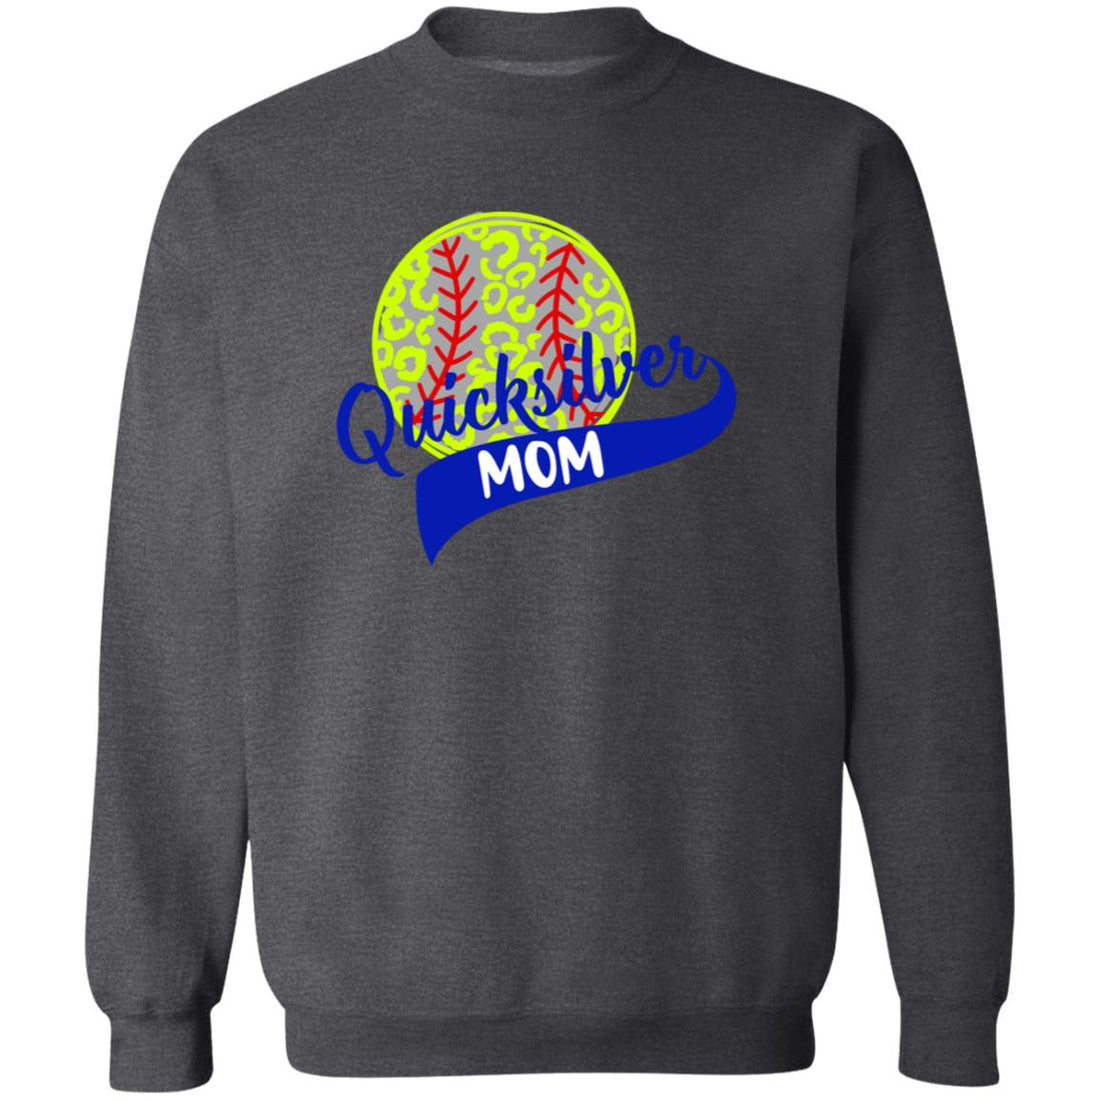 QS Cheetah Mom Crewneck Pullover Sweatshirt - Sweatshirts - Positively Sassy - QS Cheetah Mom Crewneck Pullover Sweatshirt